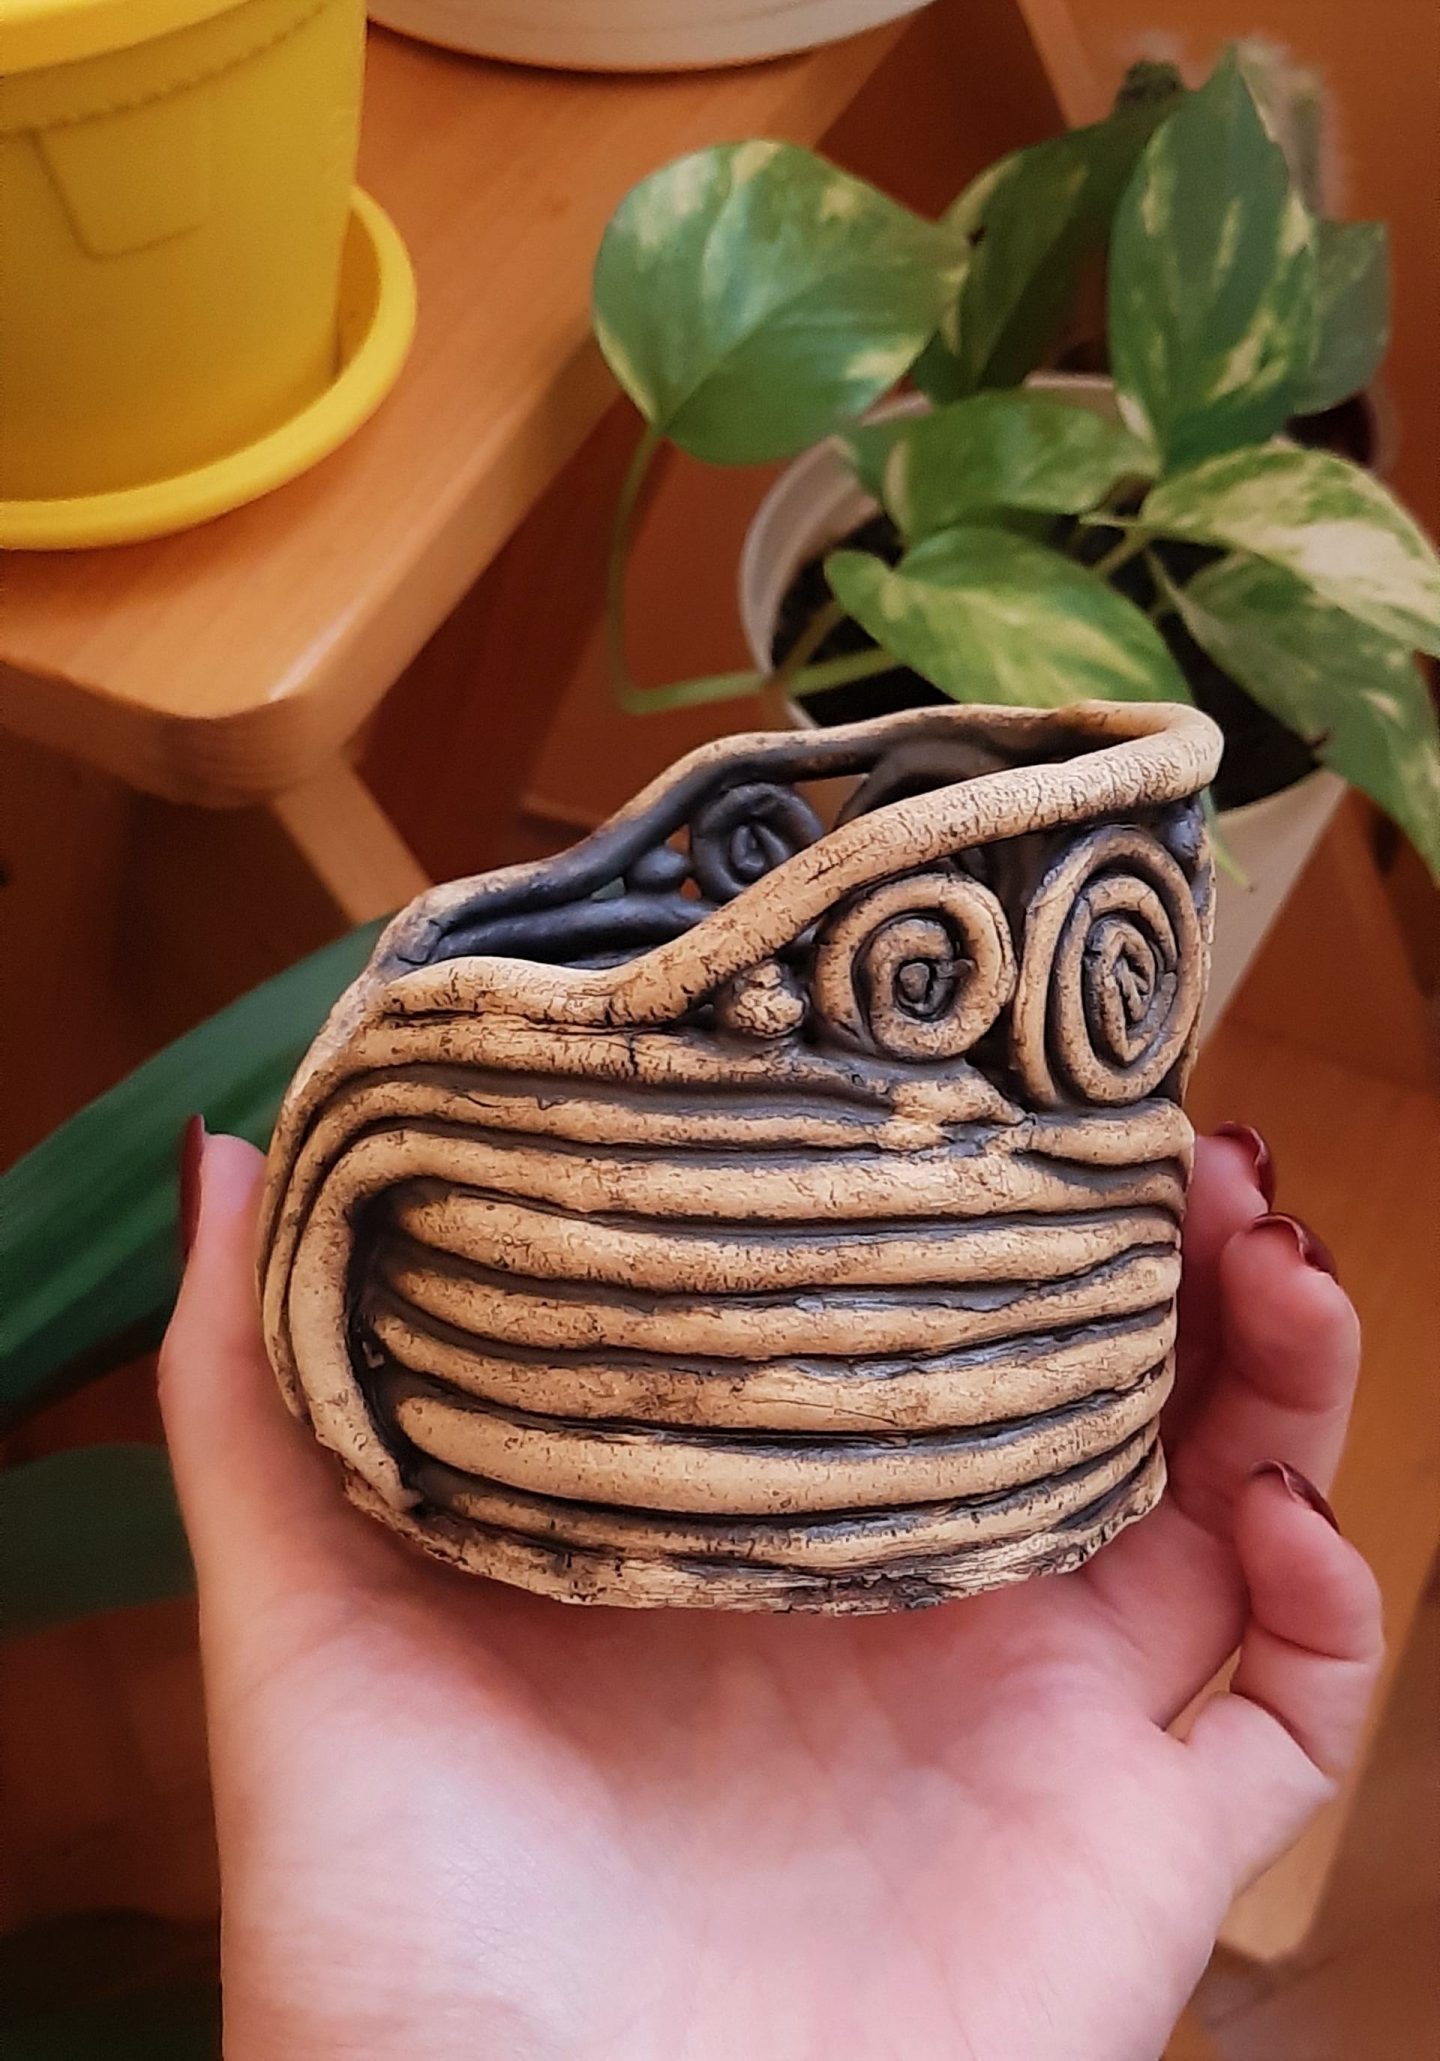 Preporuka za kurs keramike © According to Kristina